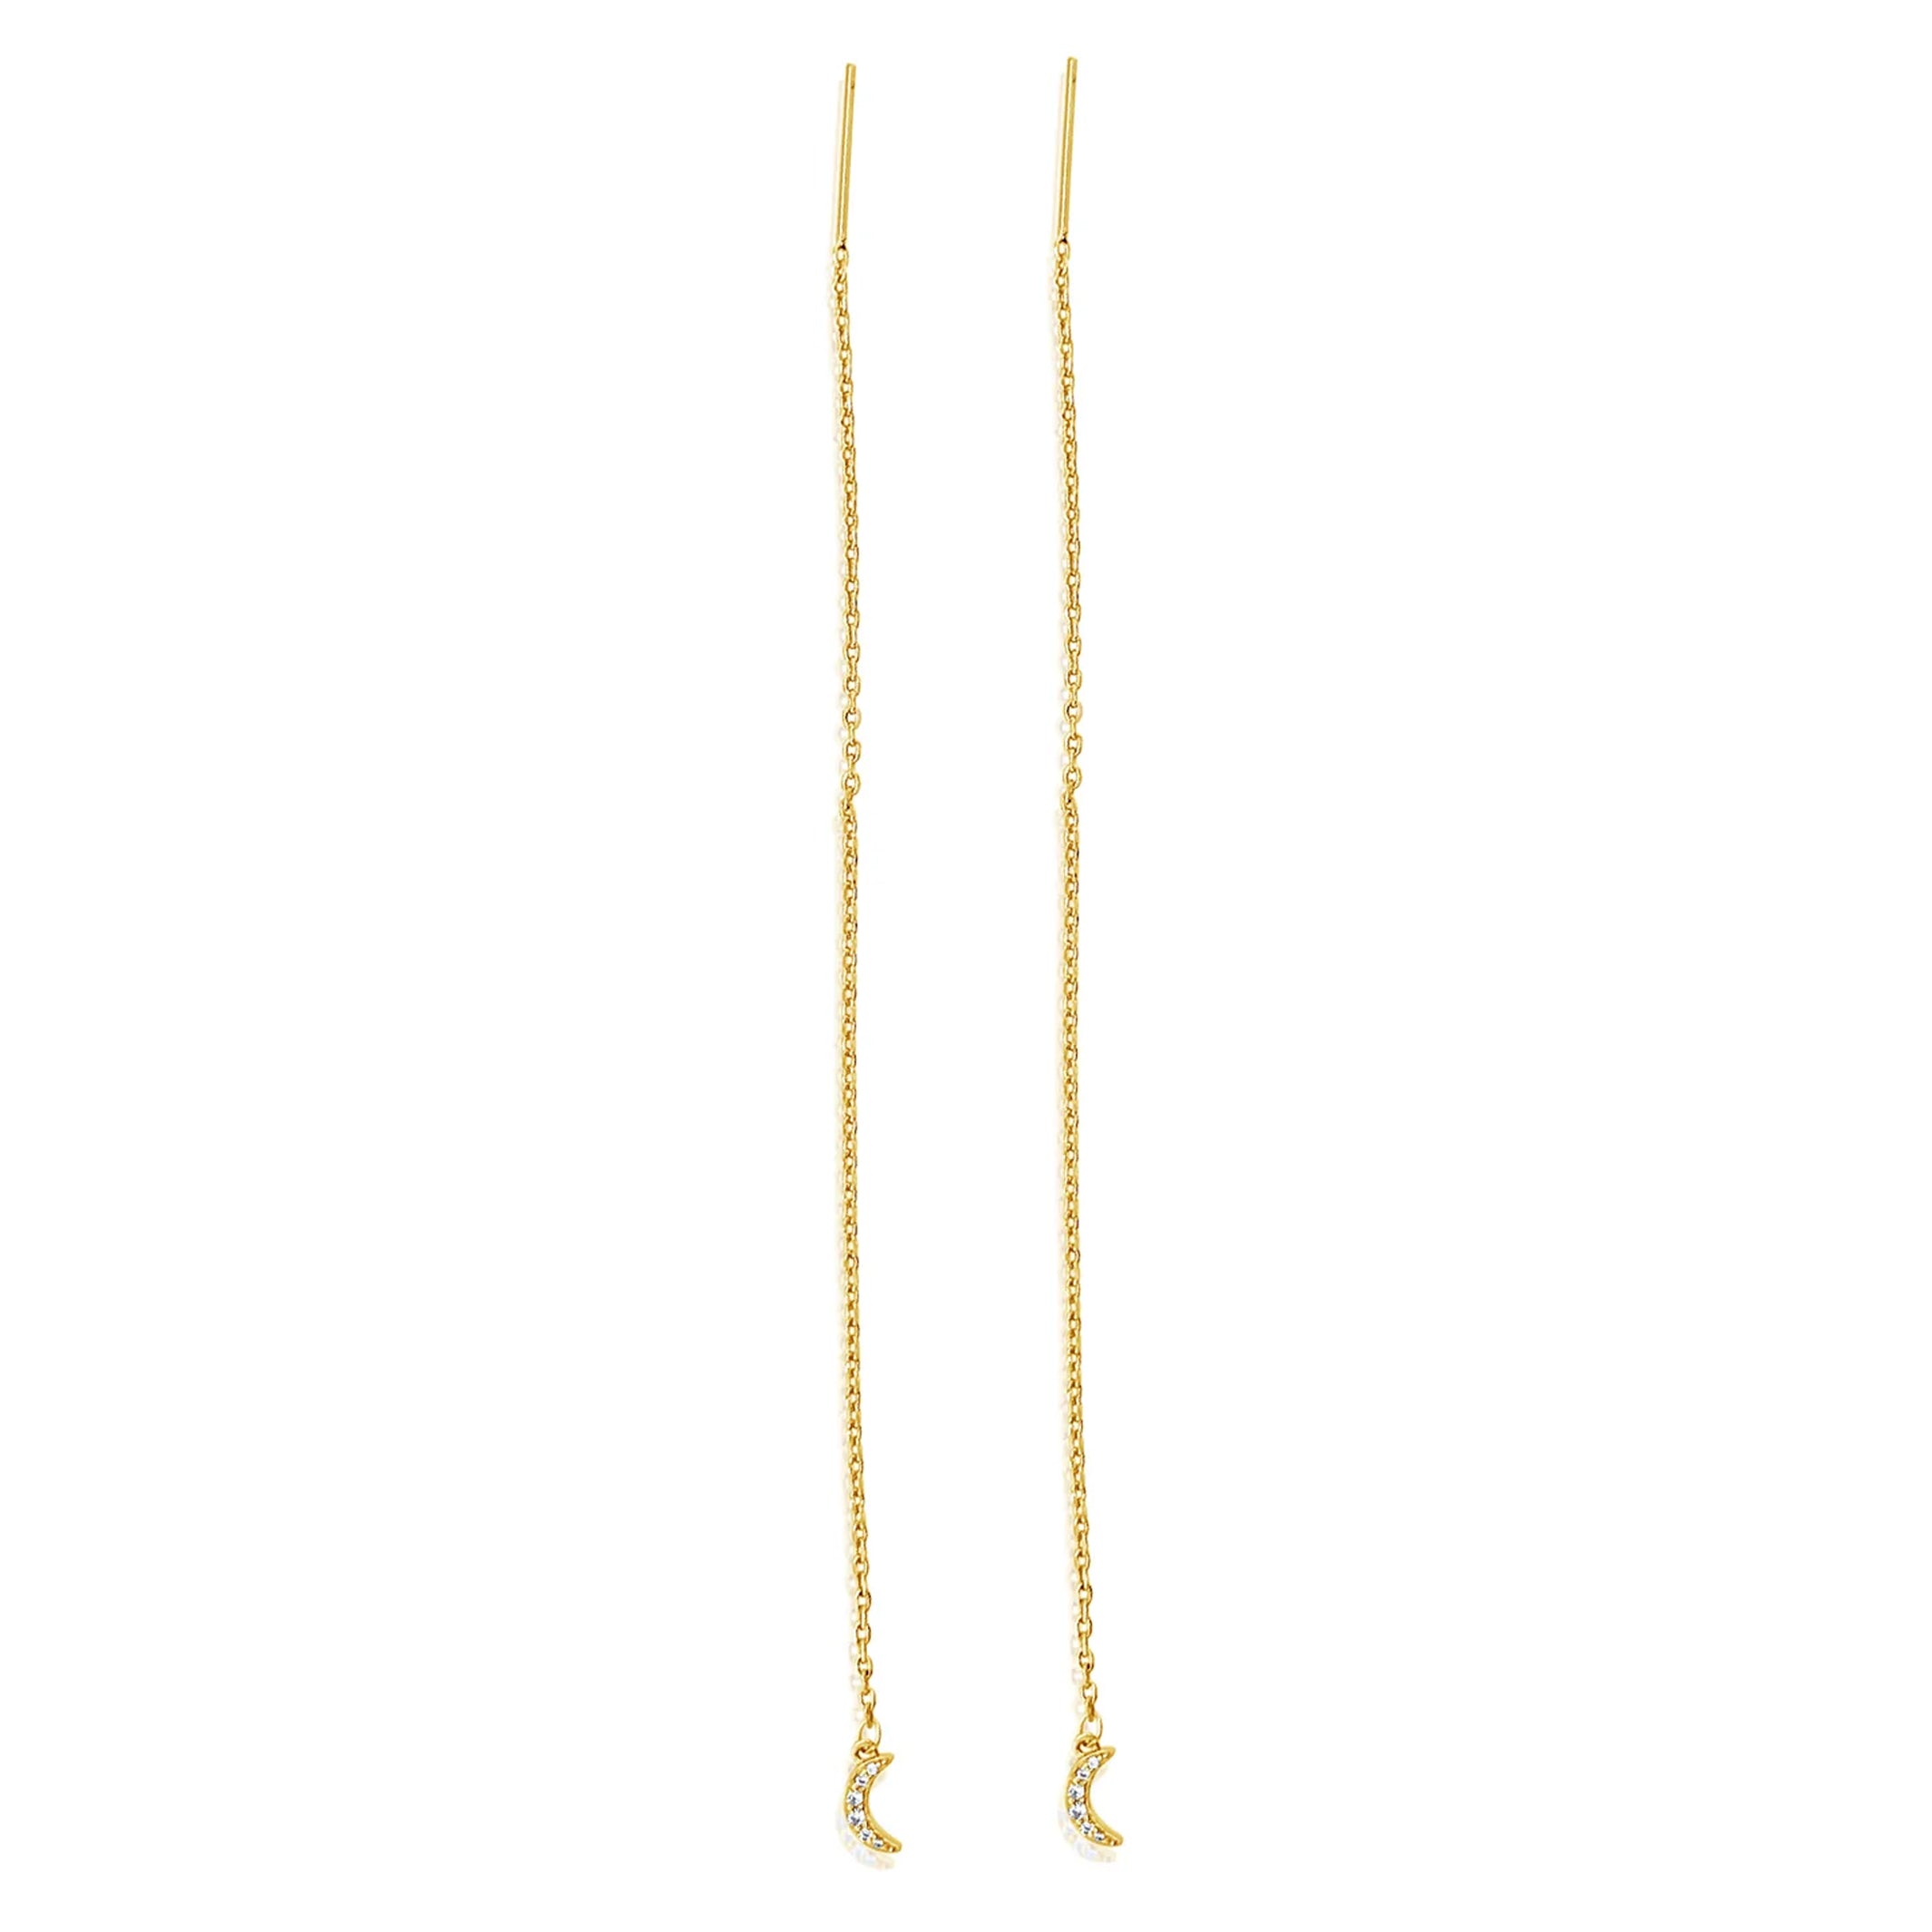 Buy dangle earrings long gold chain indian traditional jhumka chain kundan